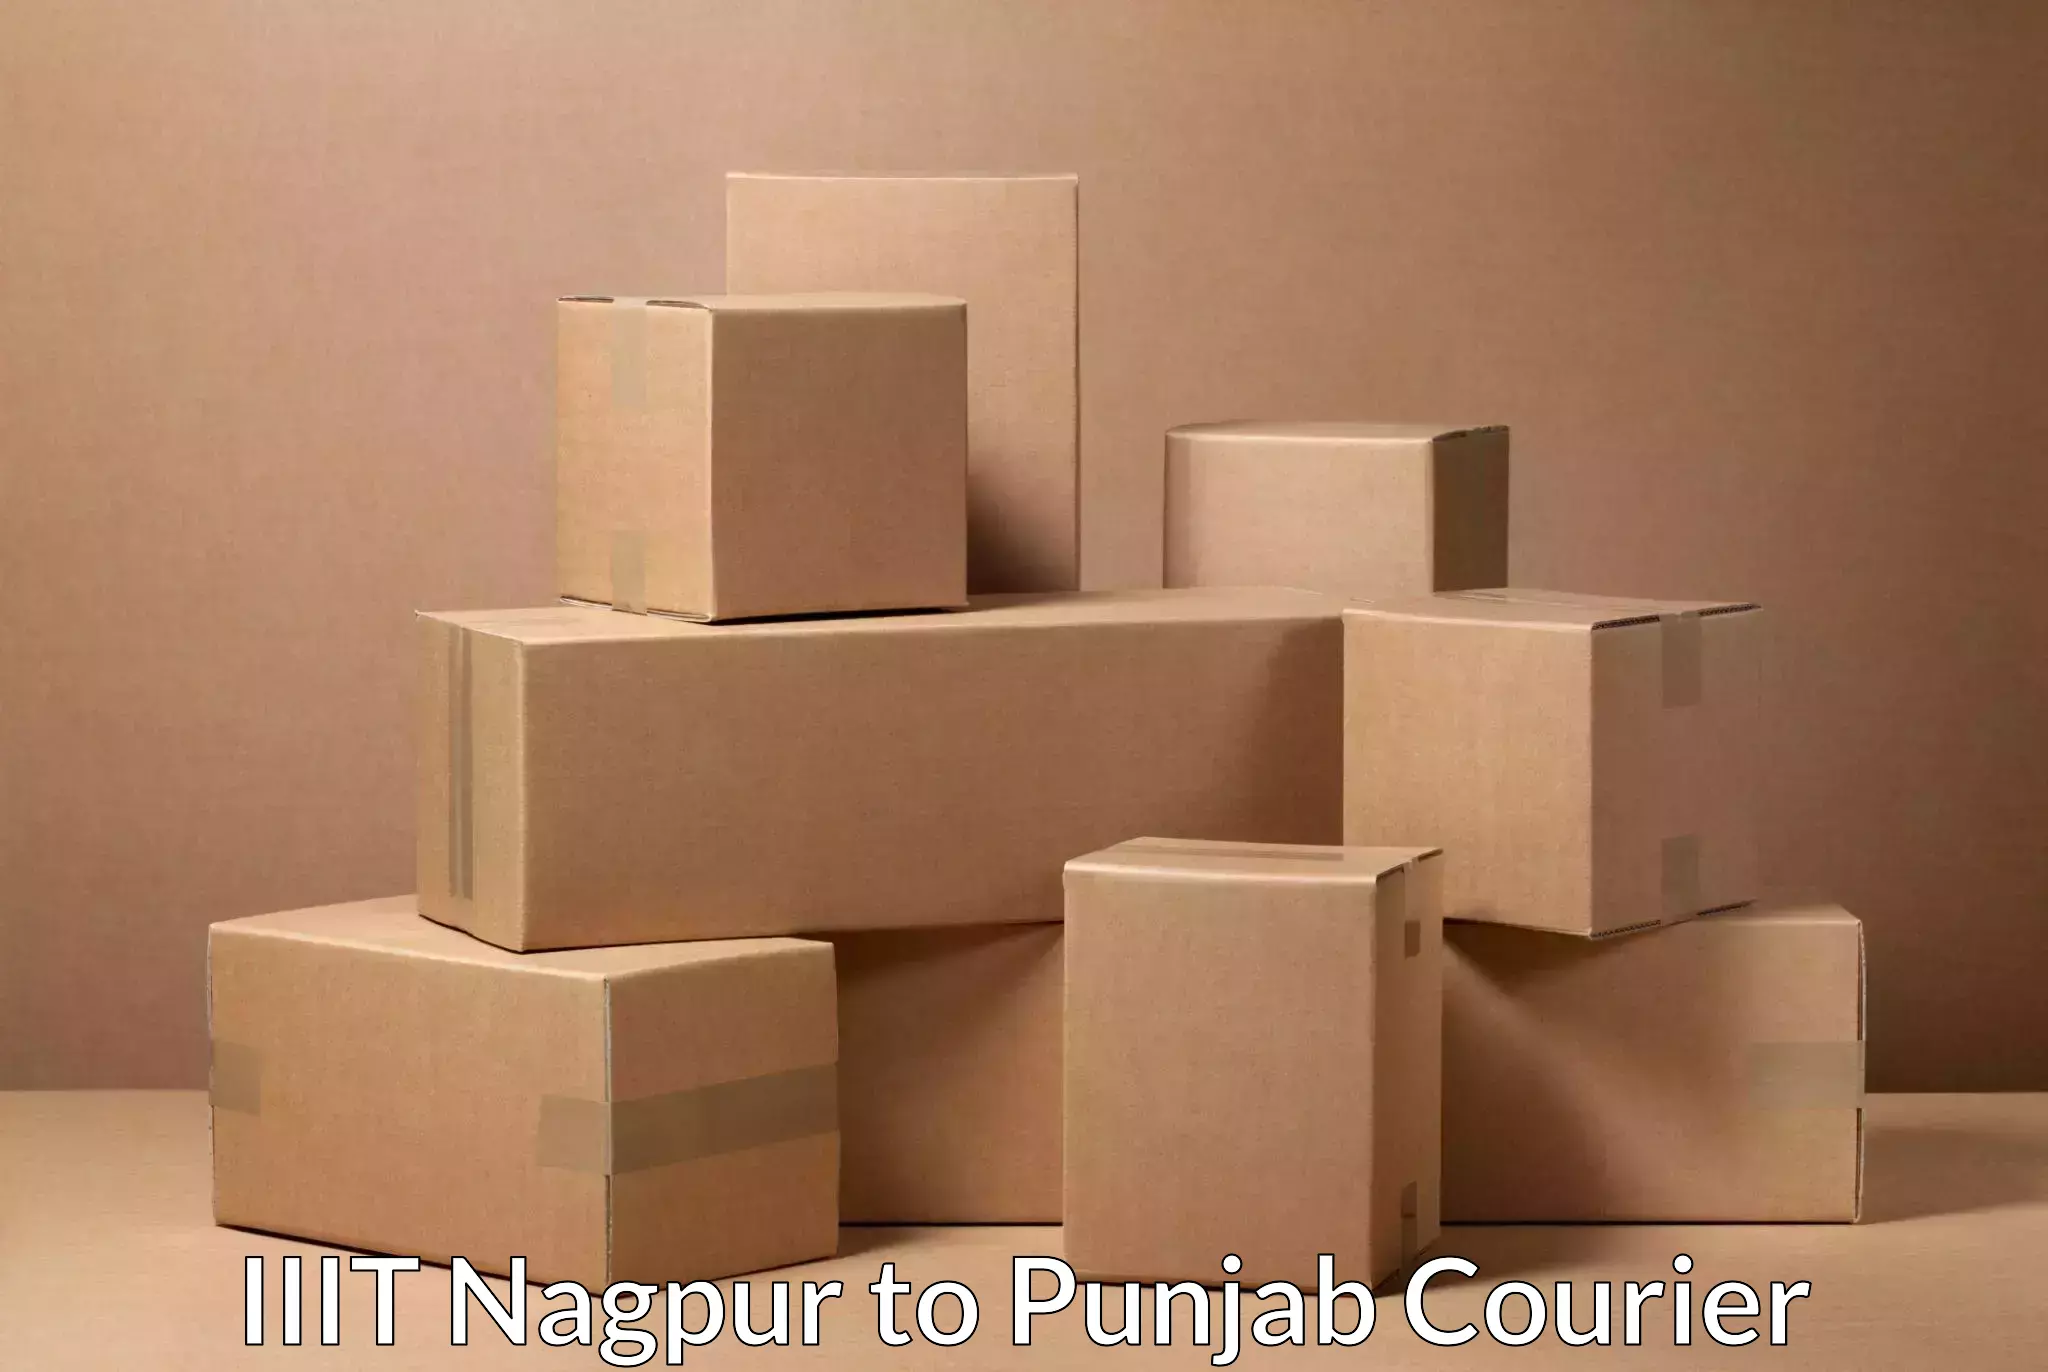 Professional courier handling IIIT Nagpur to Ludhiana